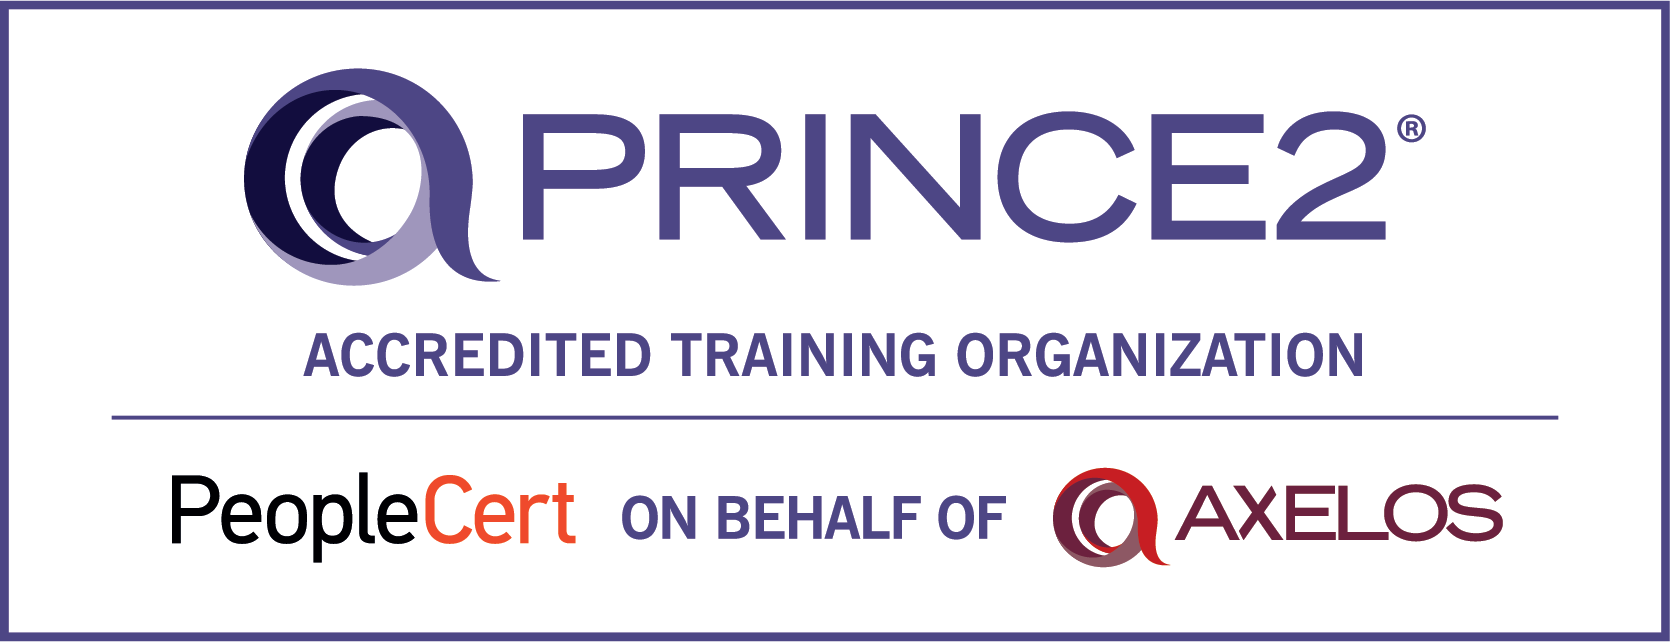 PRINCE2 Accredited Training Organisation logo